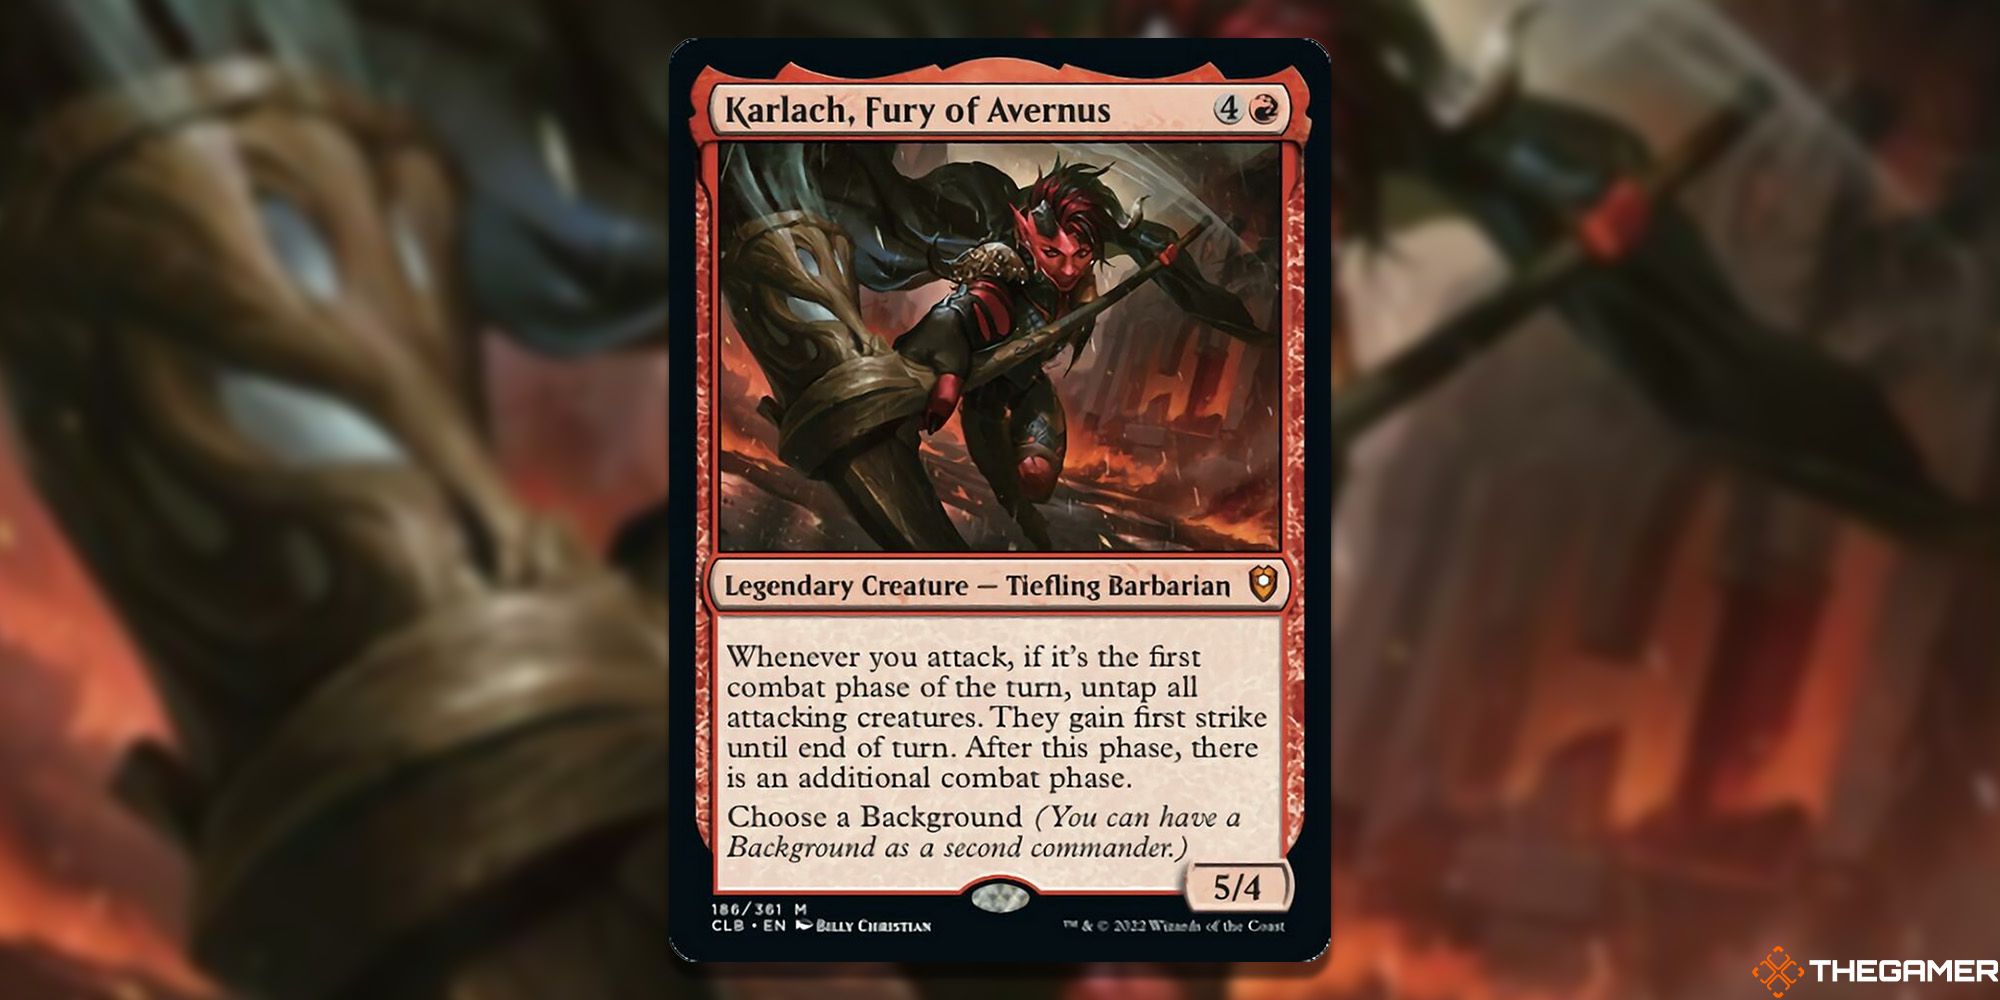 Karlach, Fury of Avernus Magic: The Gathering card overlaid over artwork.